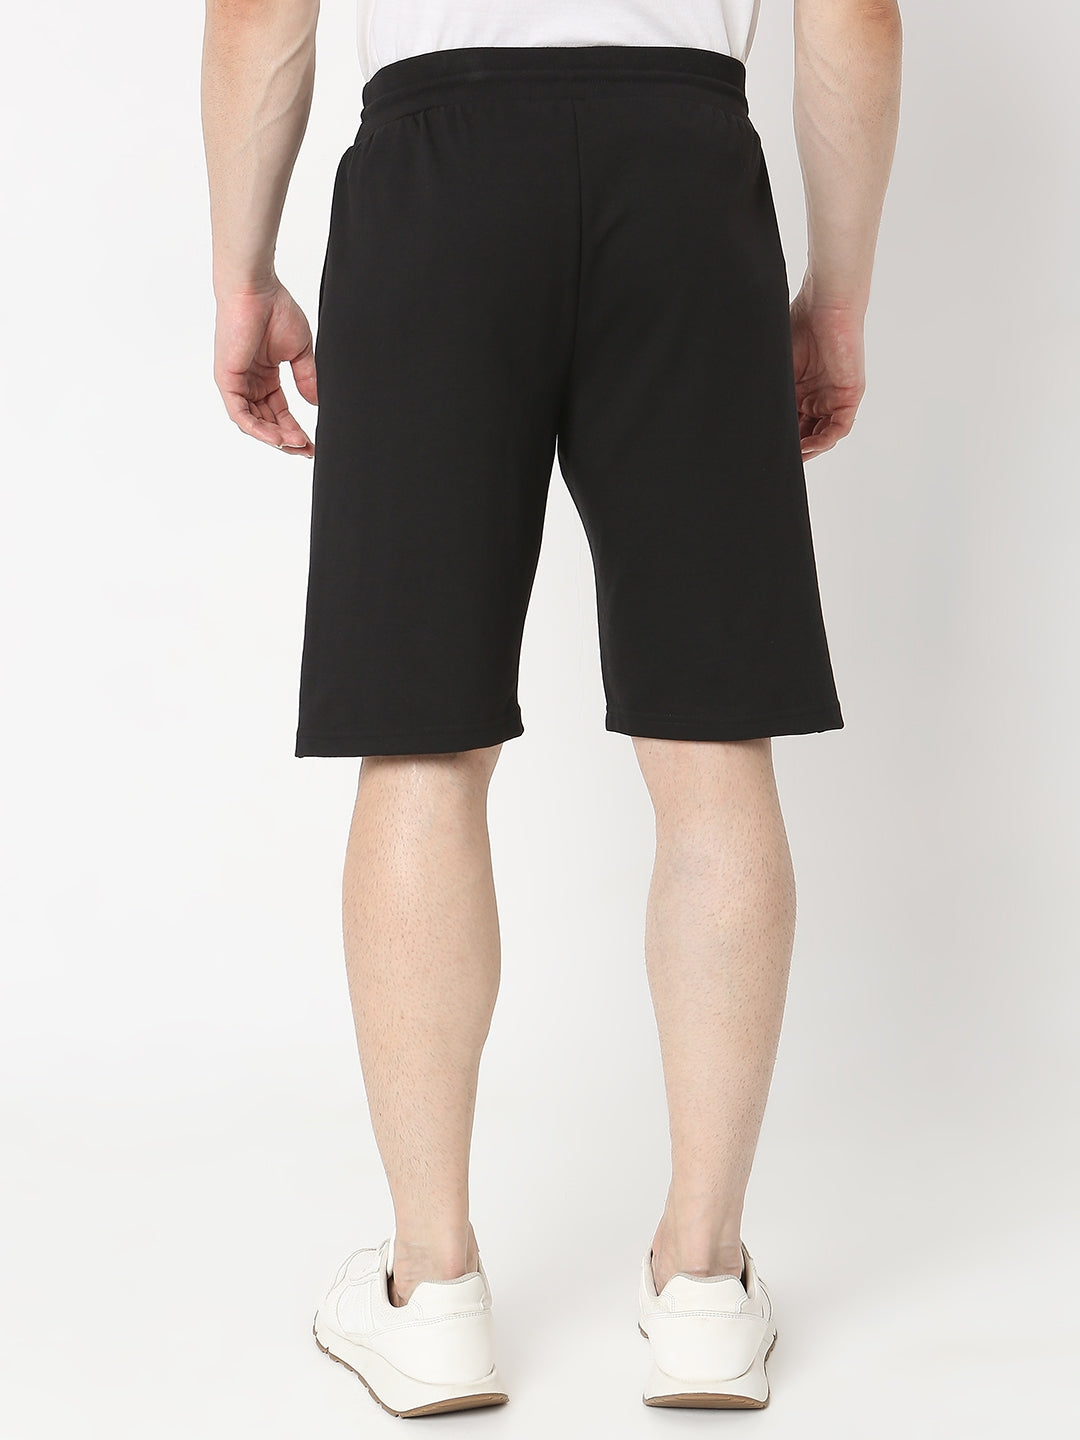 Underjeans by Spykar Men Premium Knitted Black Shorts